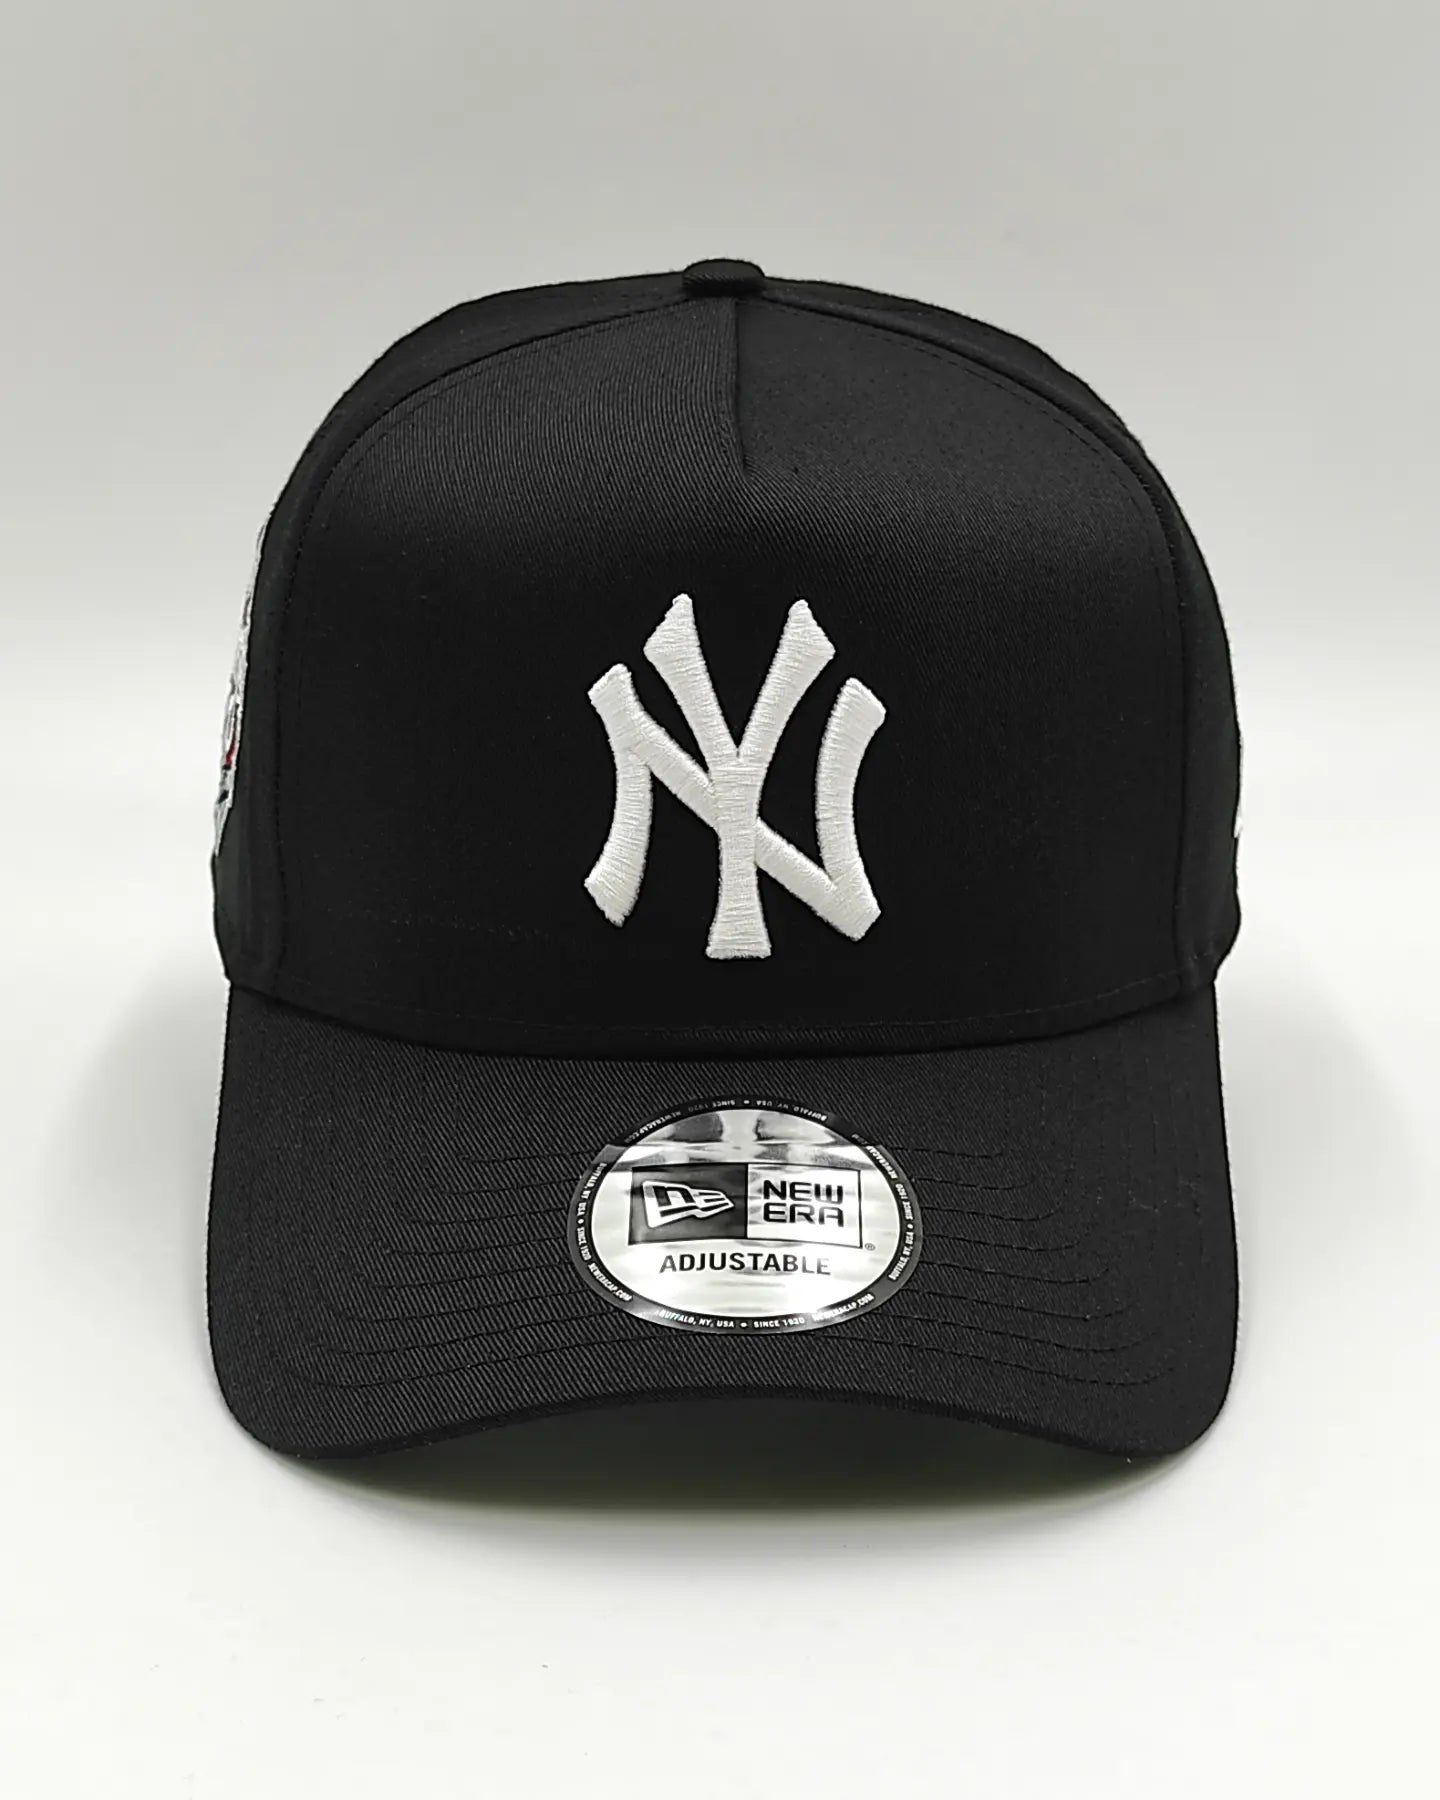 New era New york yankees world series 1999 black throwback edition 9forty aframe snapback hat